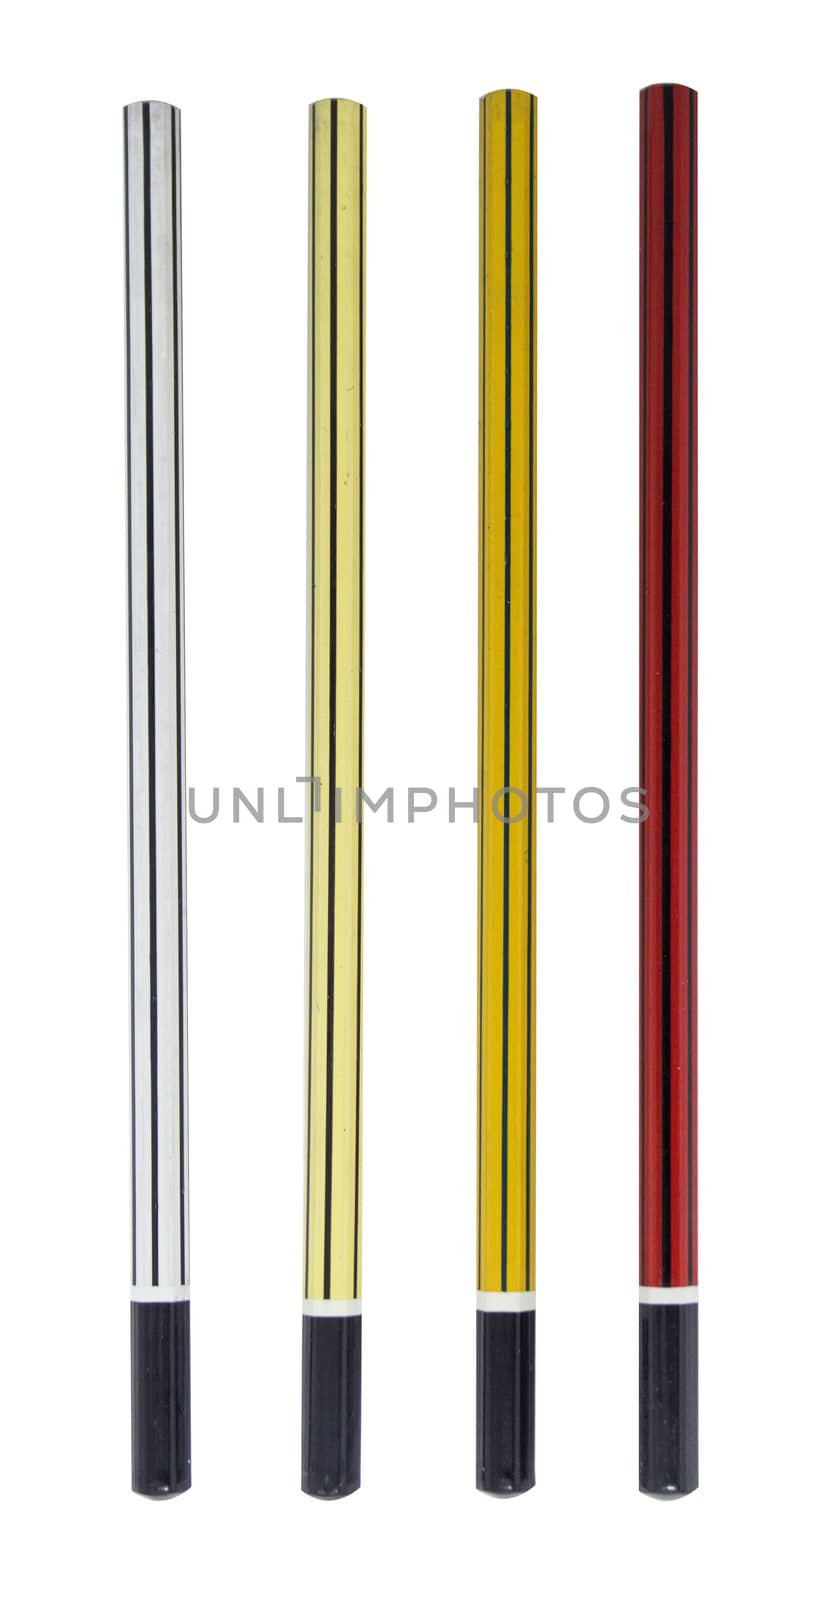 Set of Coloured pencils onwhite background.